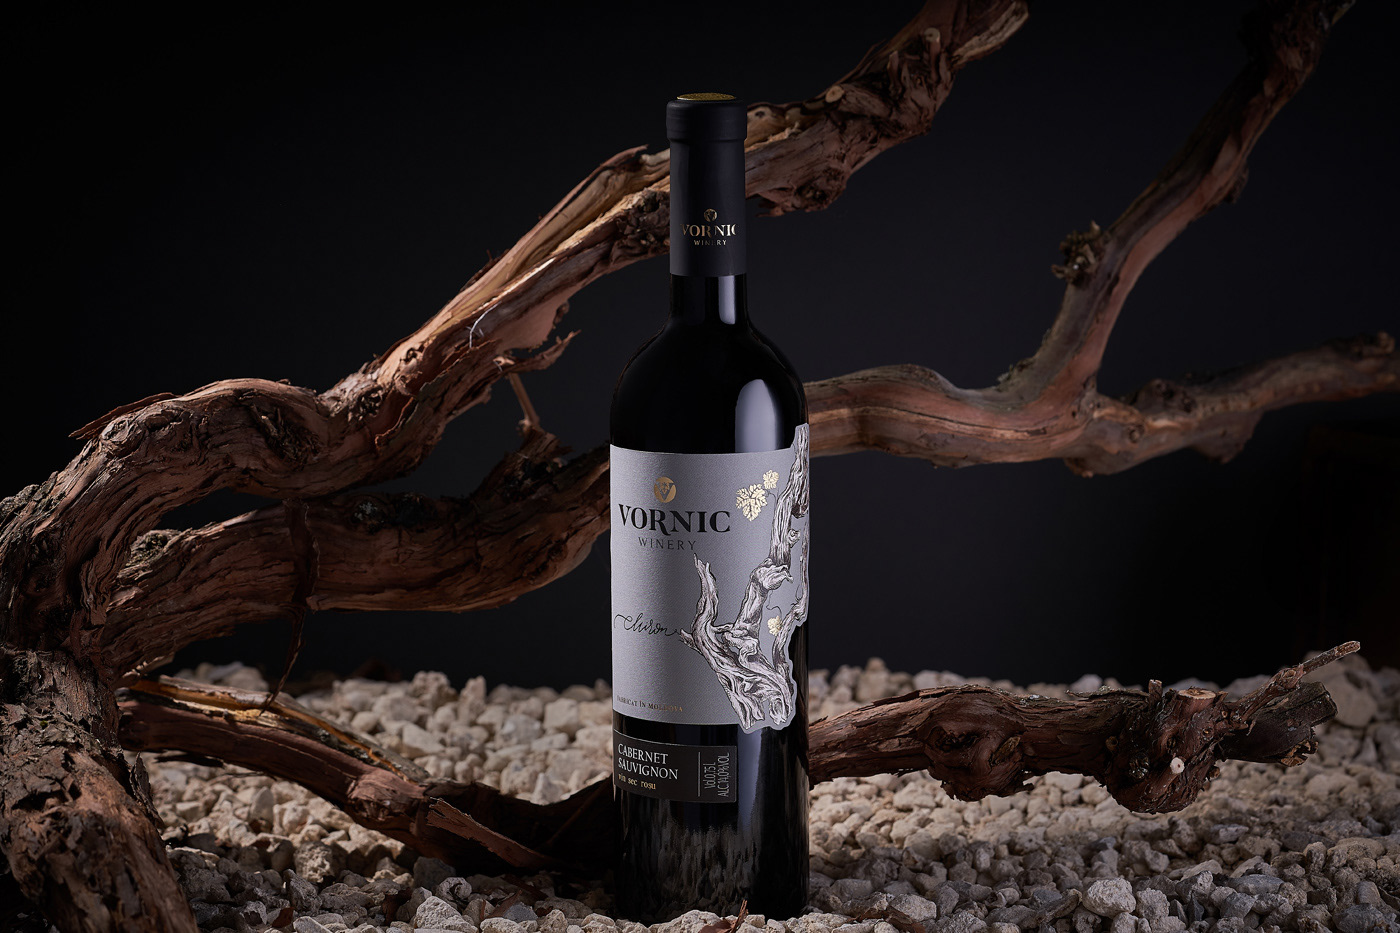 43oz design studio label design Moldova Packaging vine vornic winery wine label Wine of Moldova